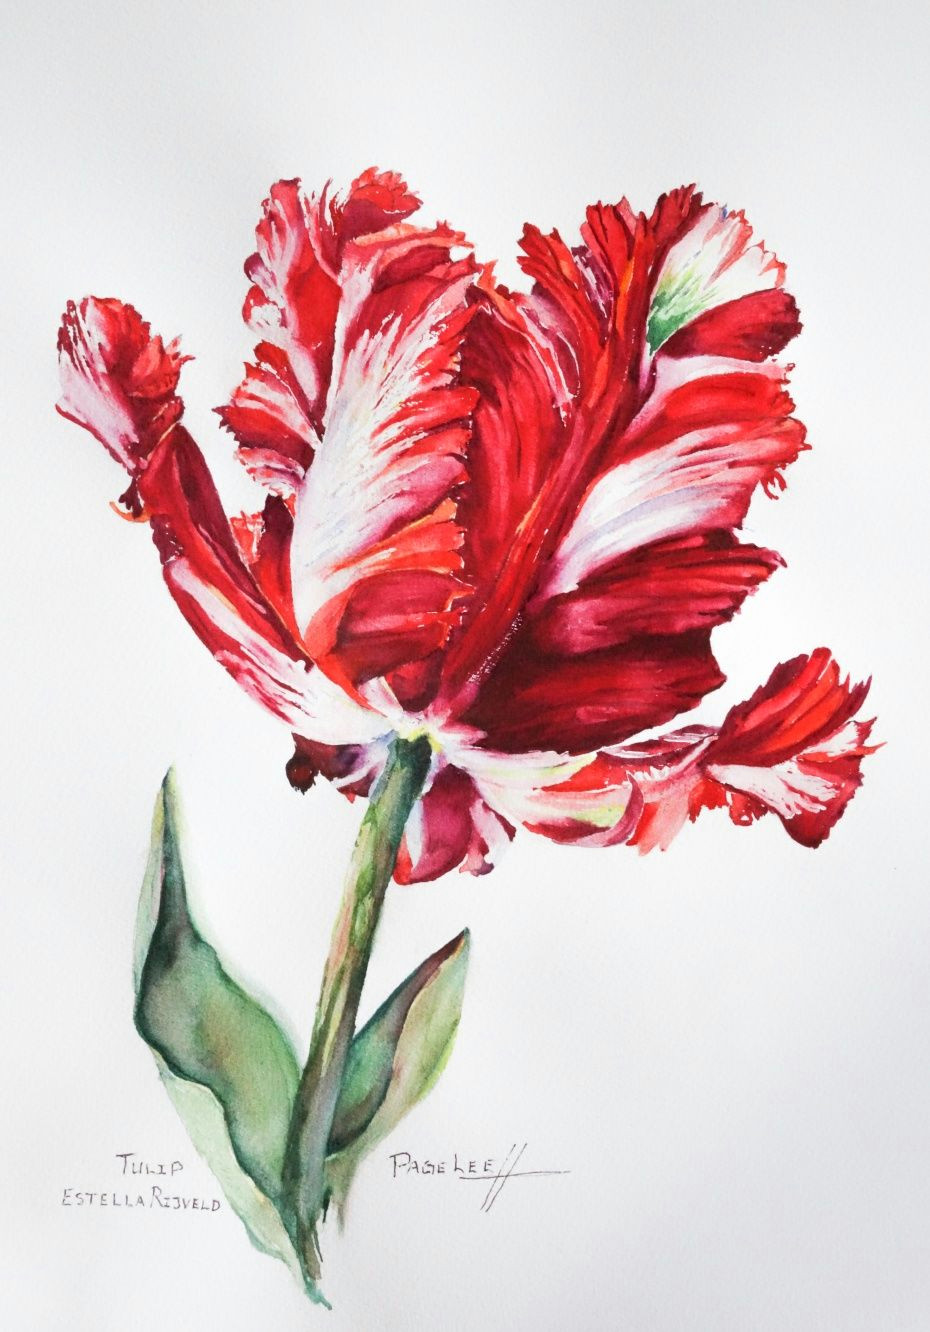 Drawing Flowers In Watercolor Page Lee Watercolor Of Carolyne Roehm Tulip Art Appreciation